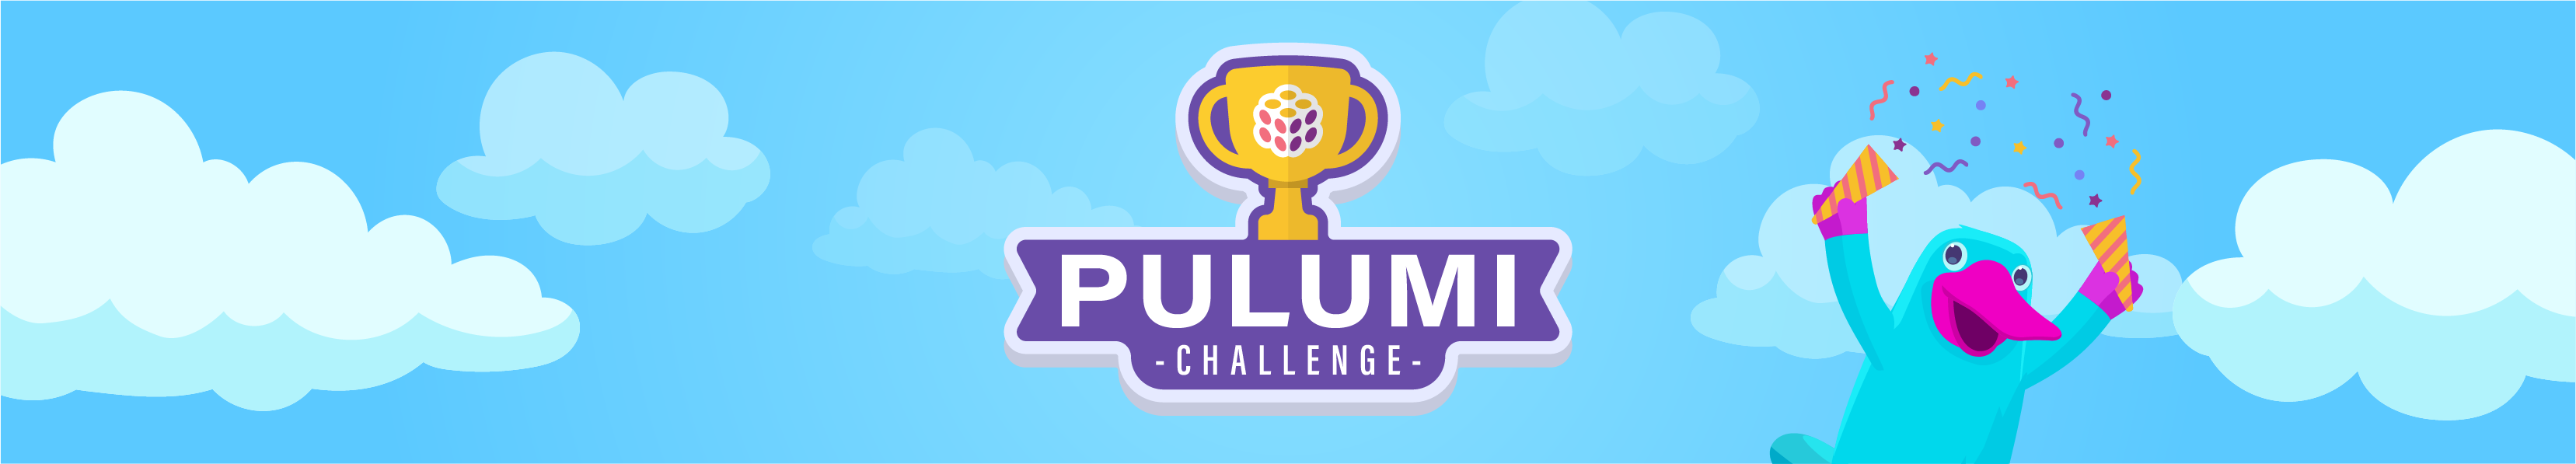 Pulumi Challenge banner image